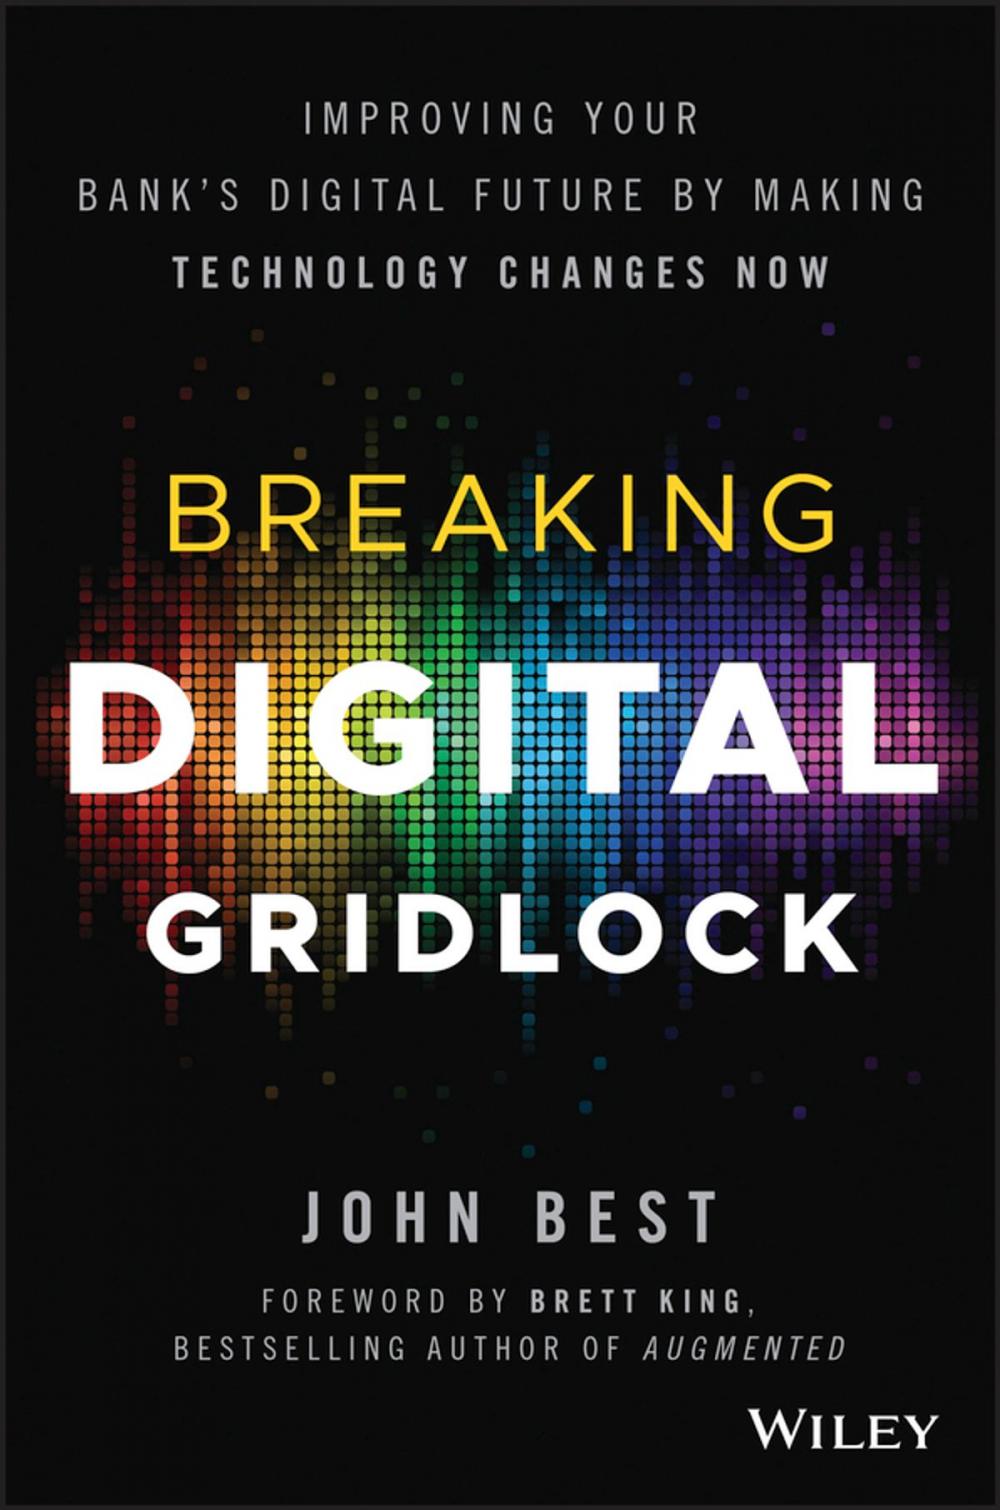 Big bigCover of Breaking Digital Gridlock